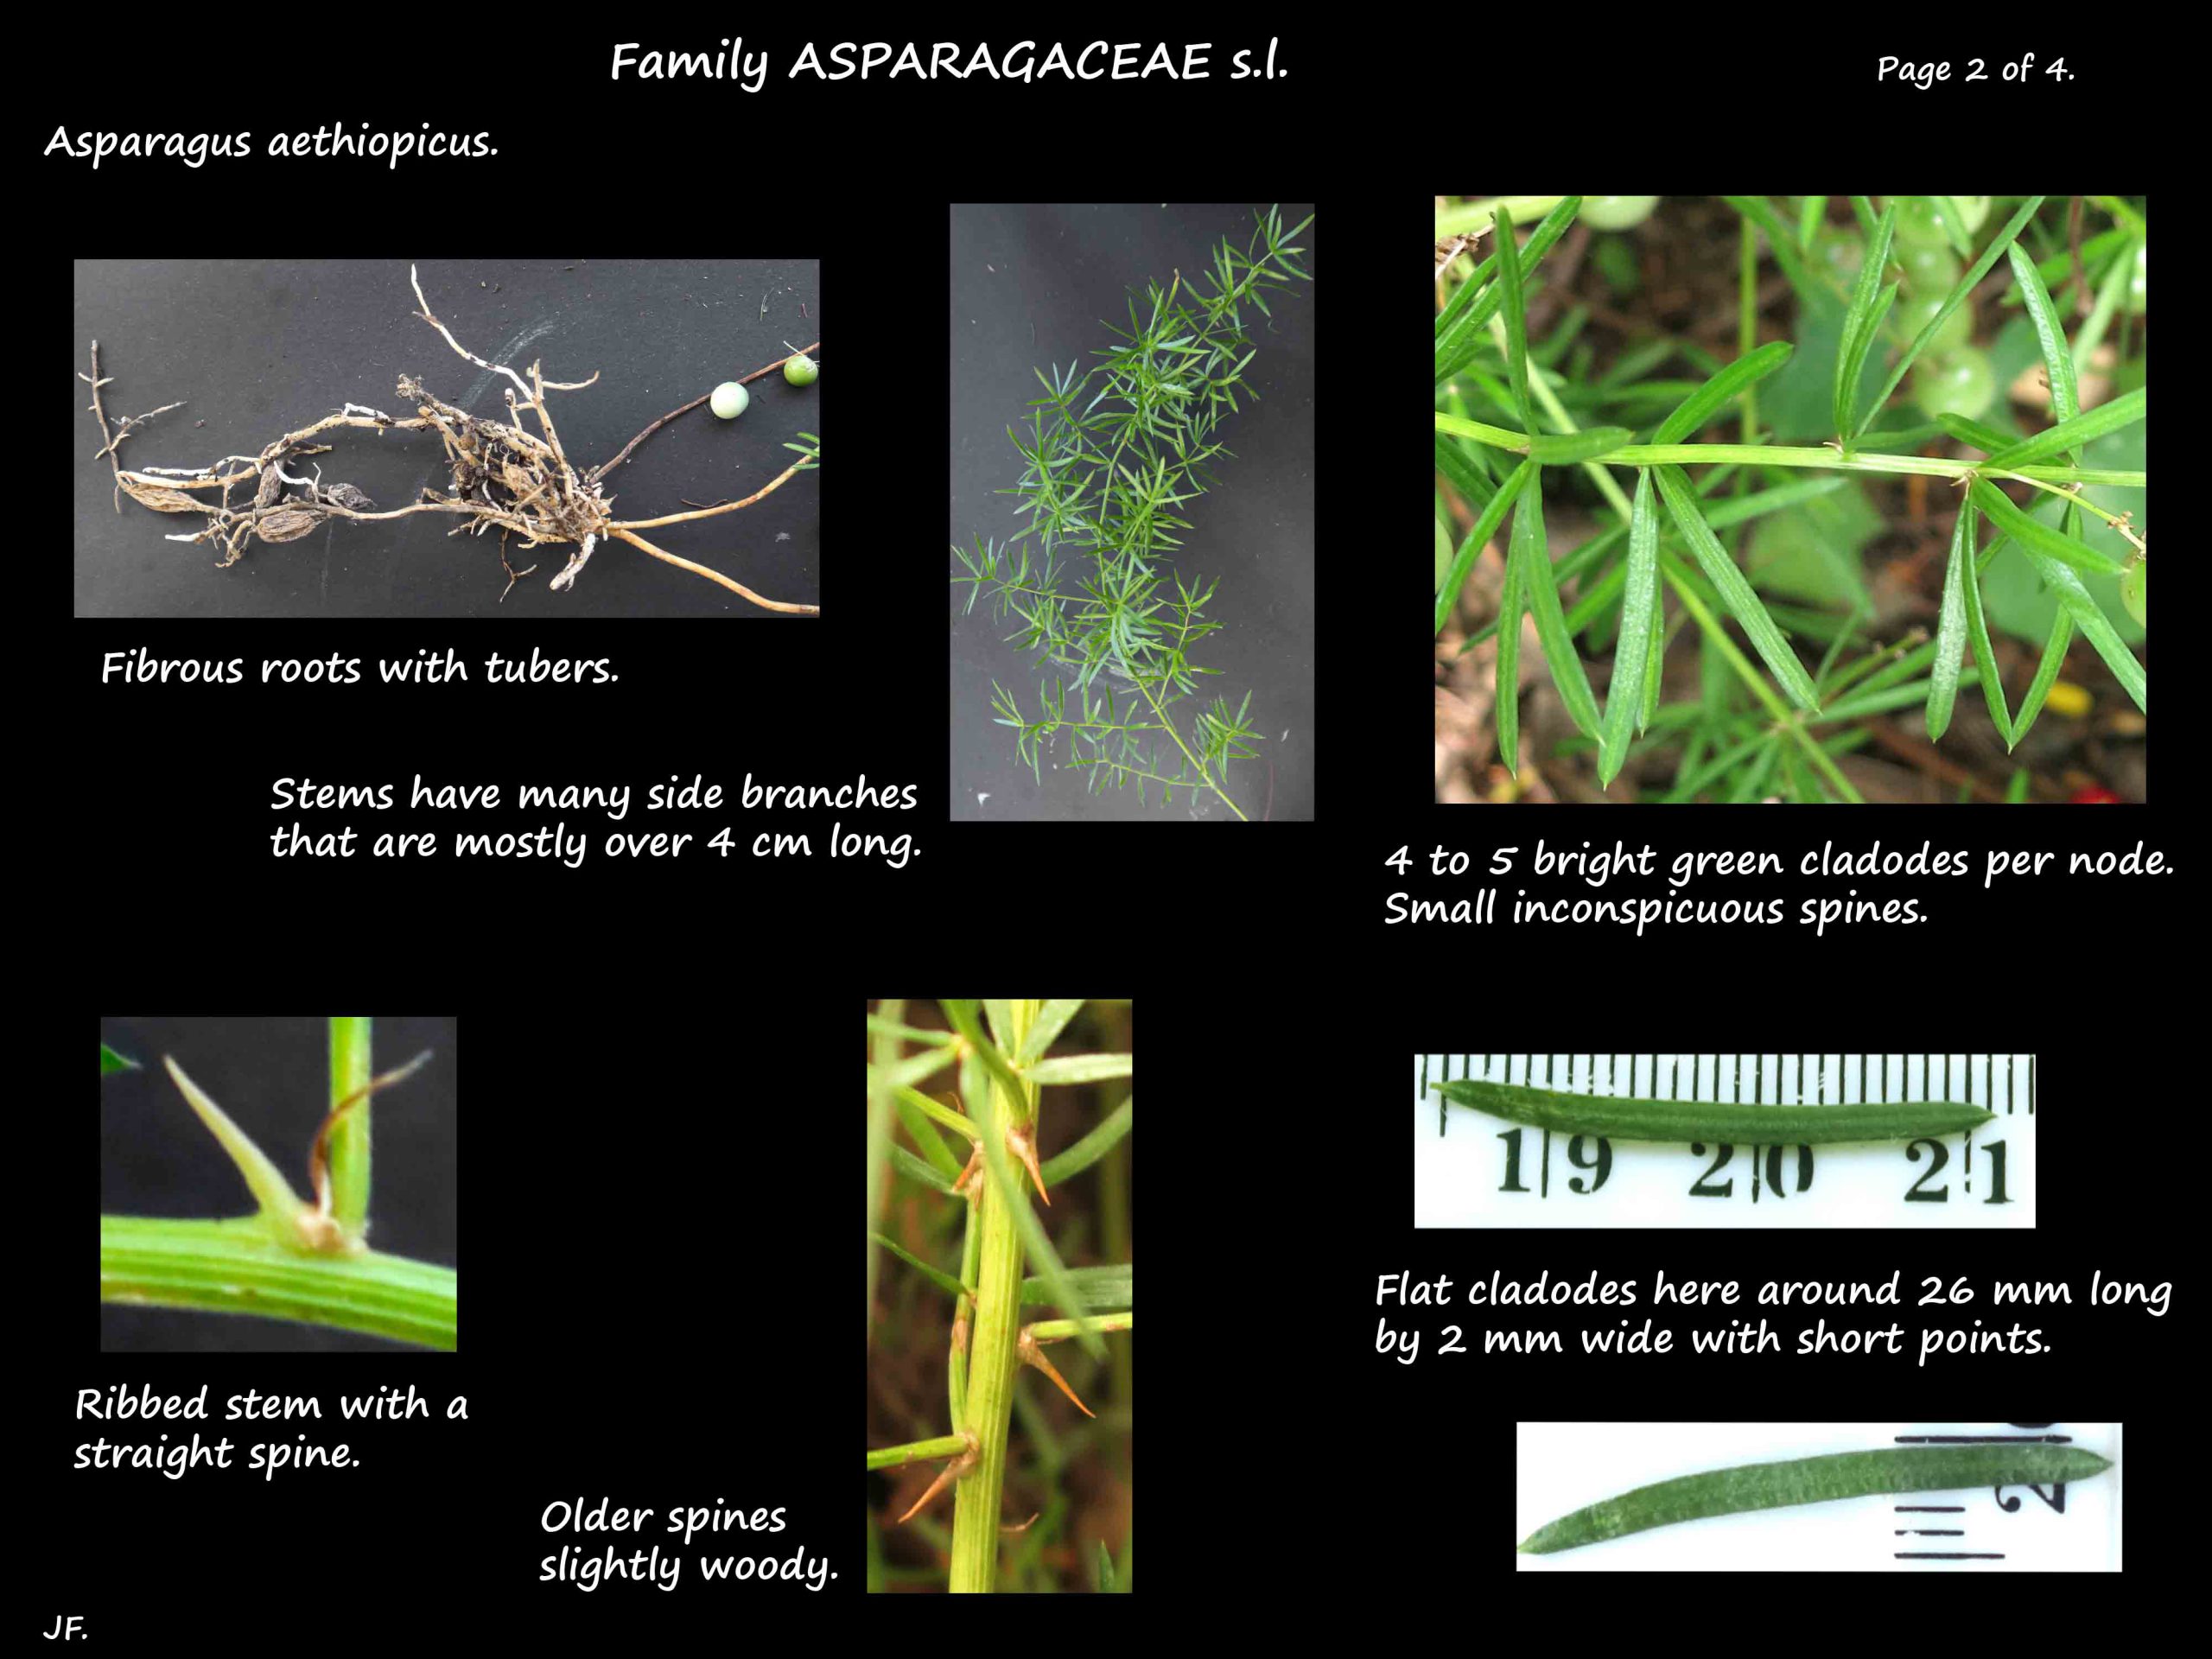 2 Asparagus aethiopicus roots & leaves